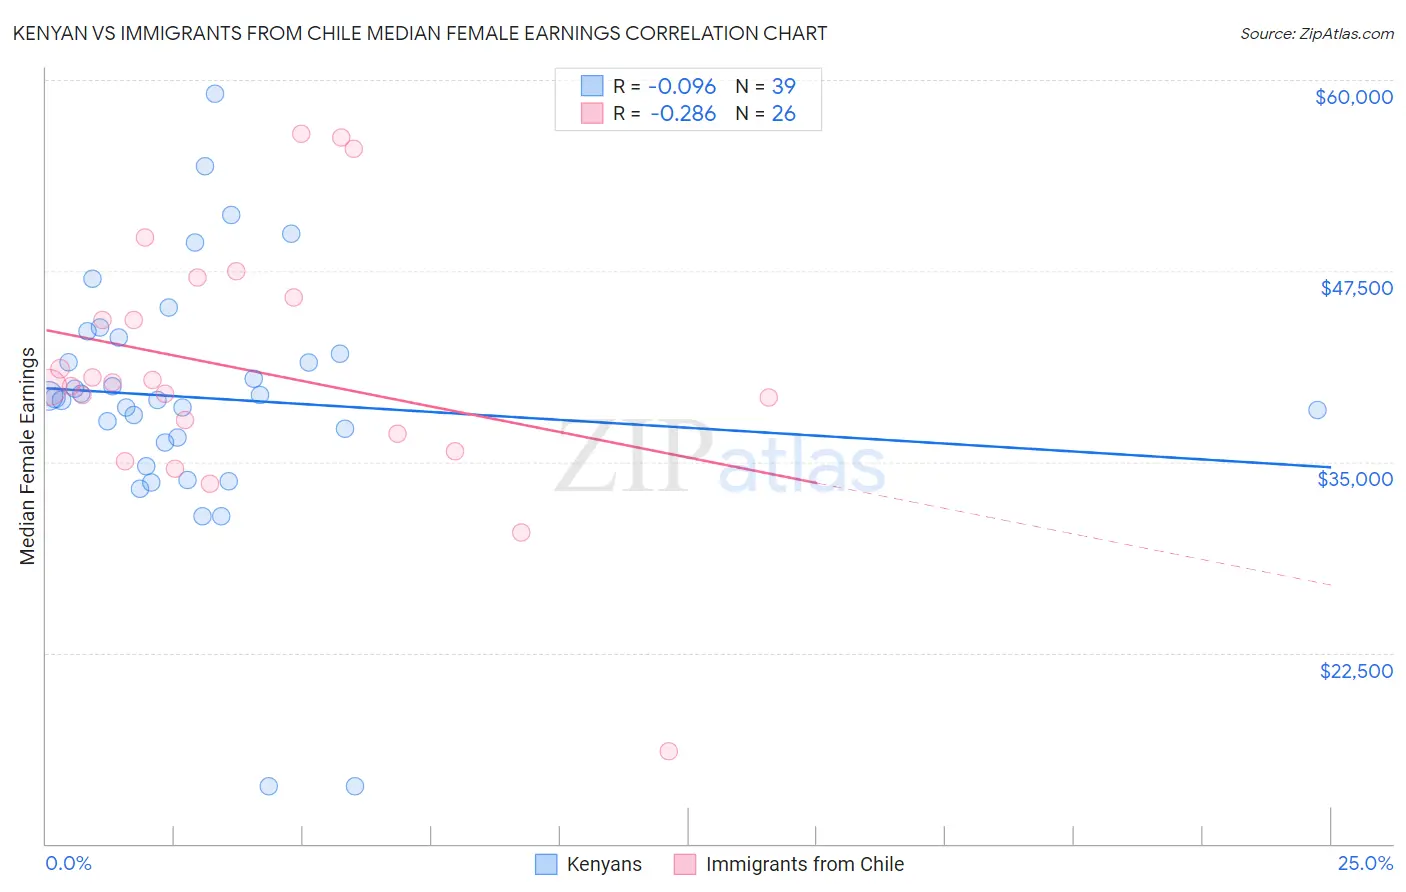 Kenyan vs Immigrants from Chile Median Female Earnings